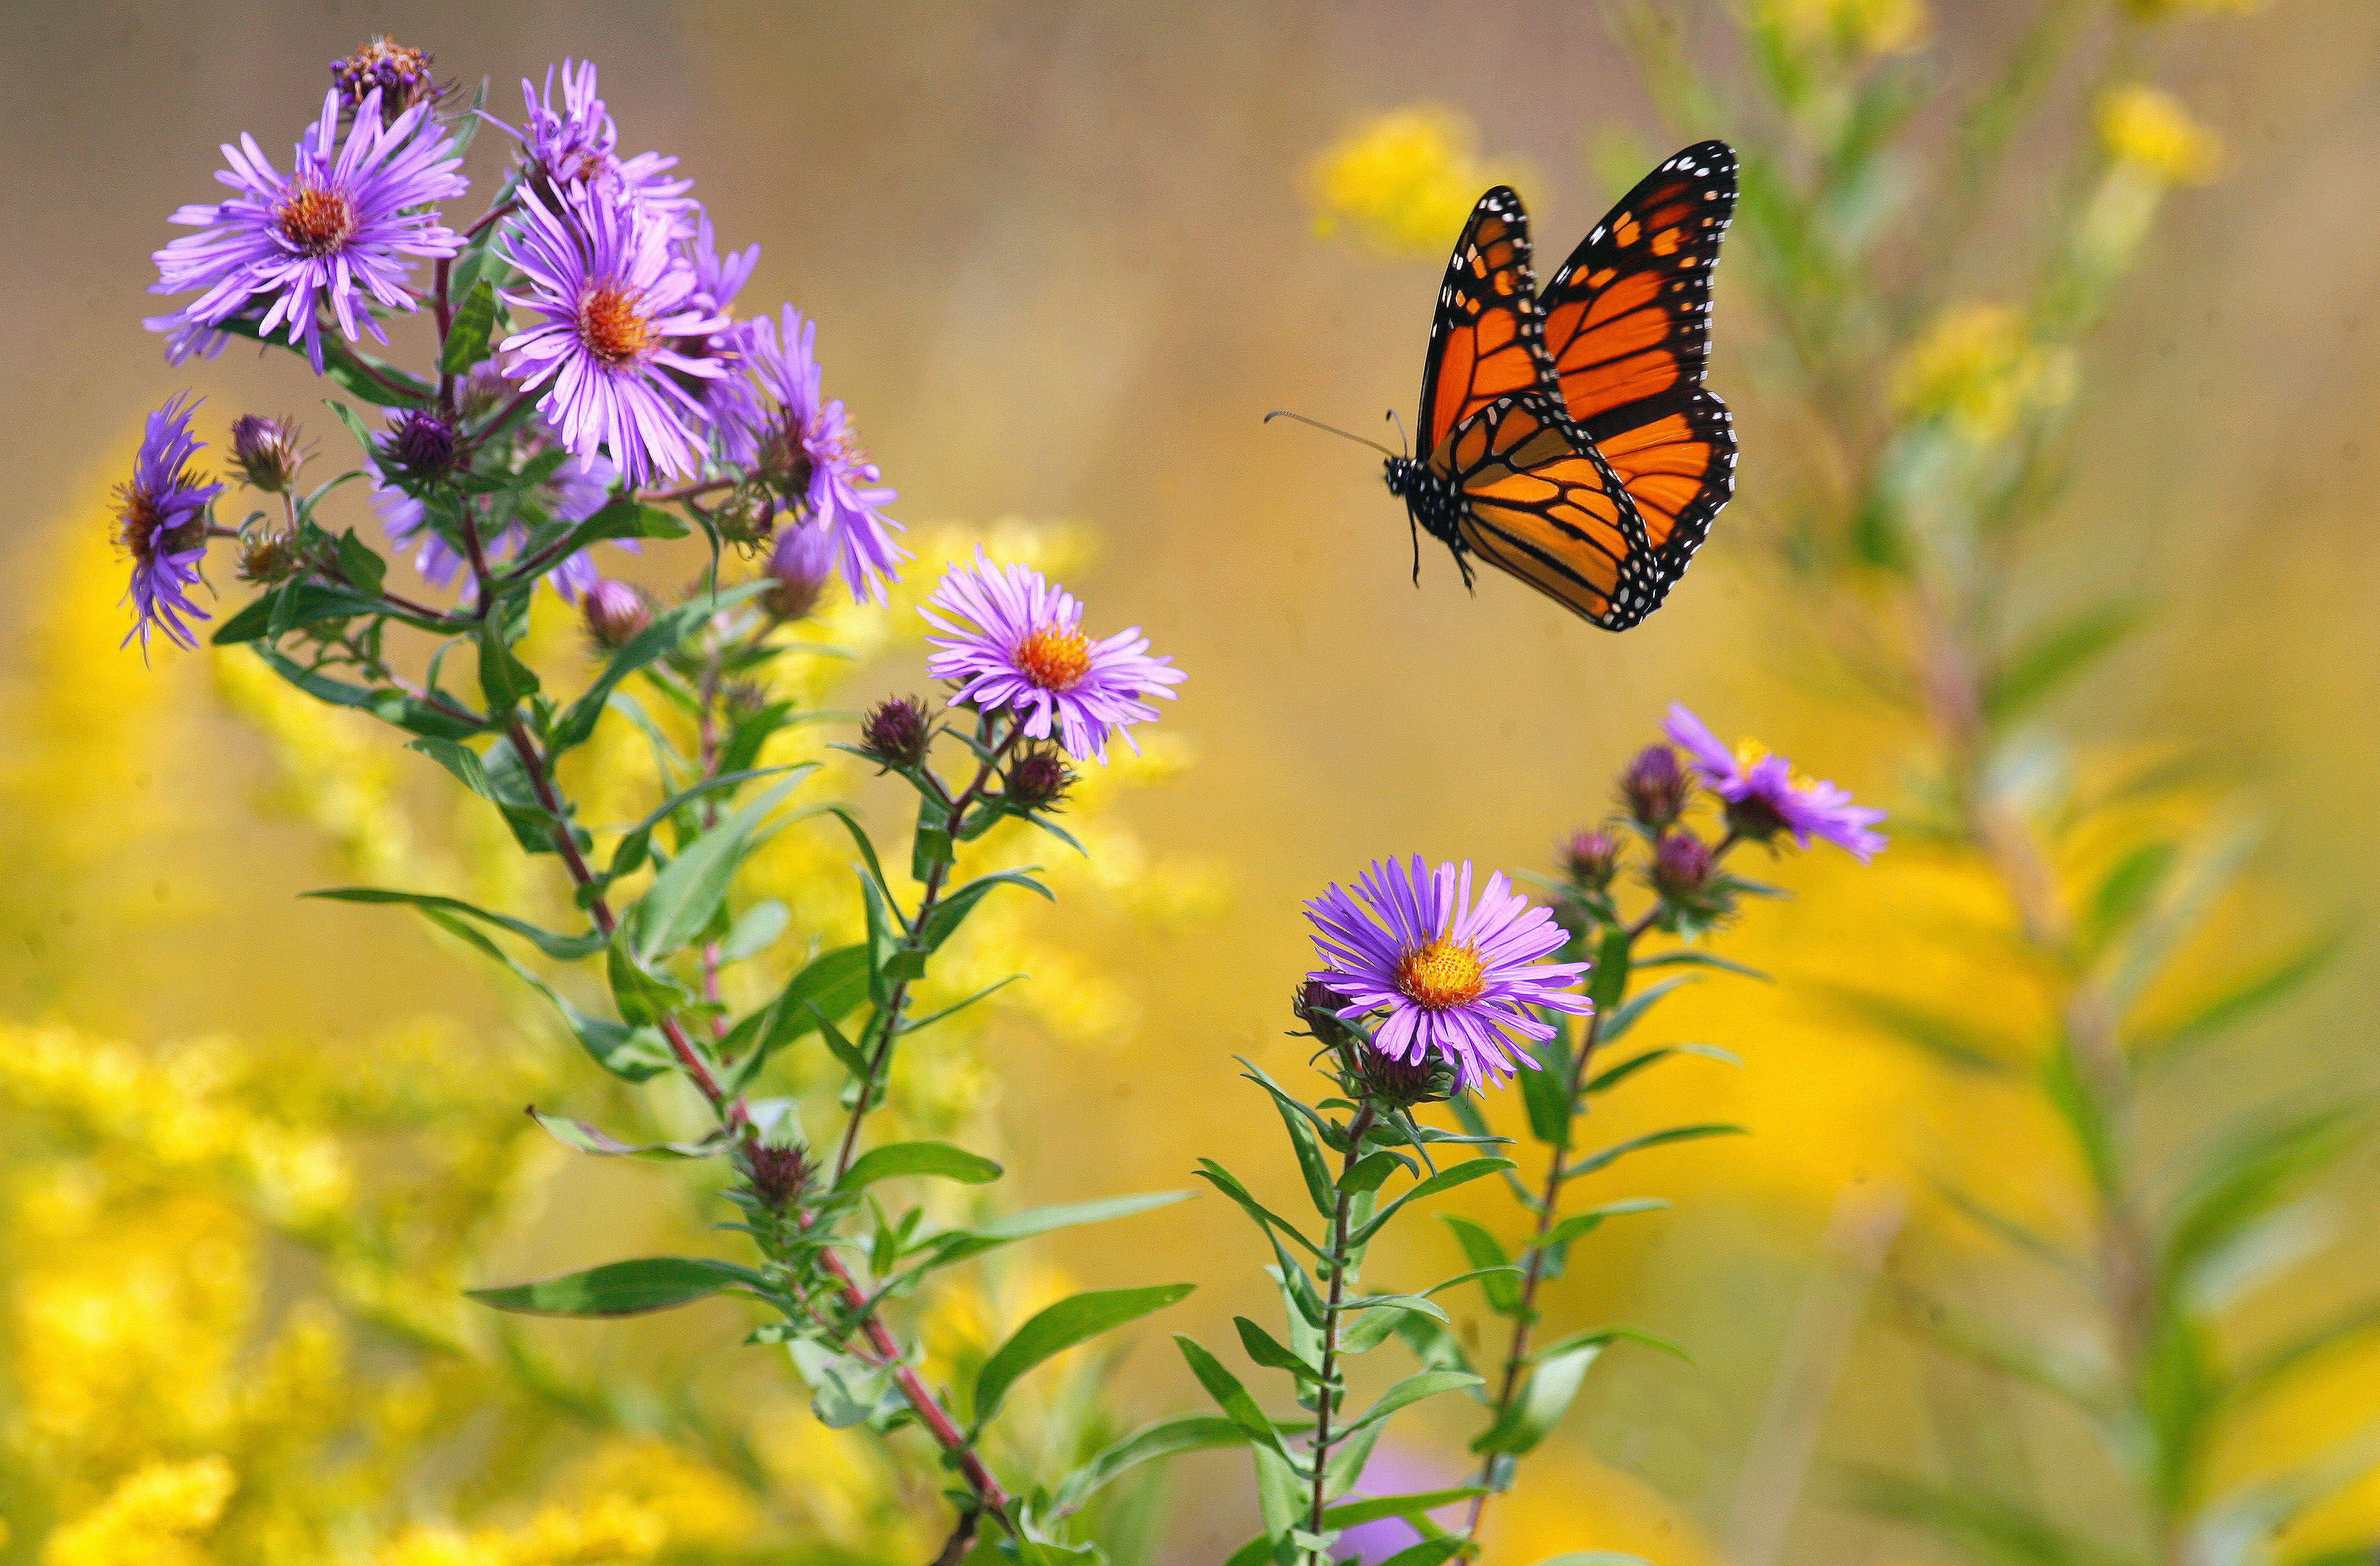 A monarch butterfly flying towards bright purple flowers.